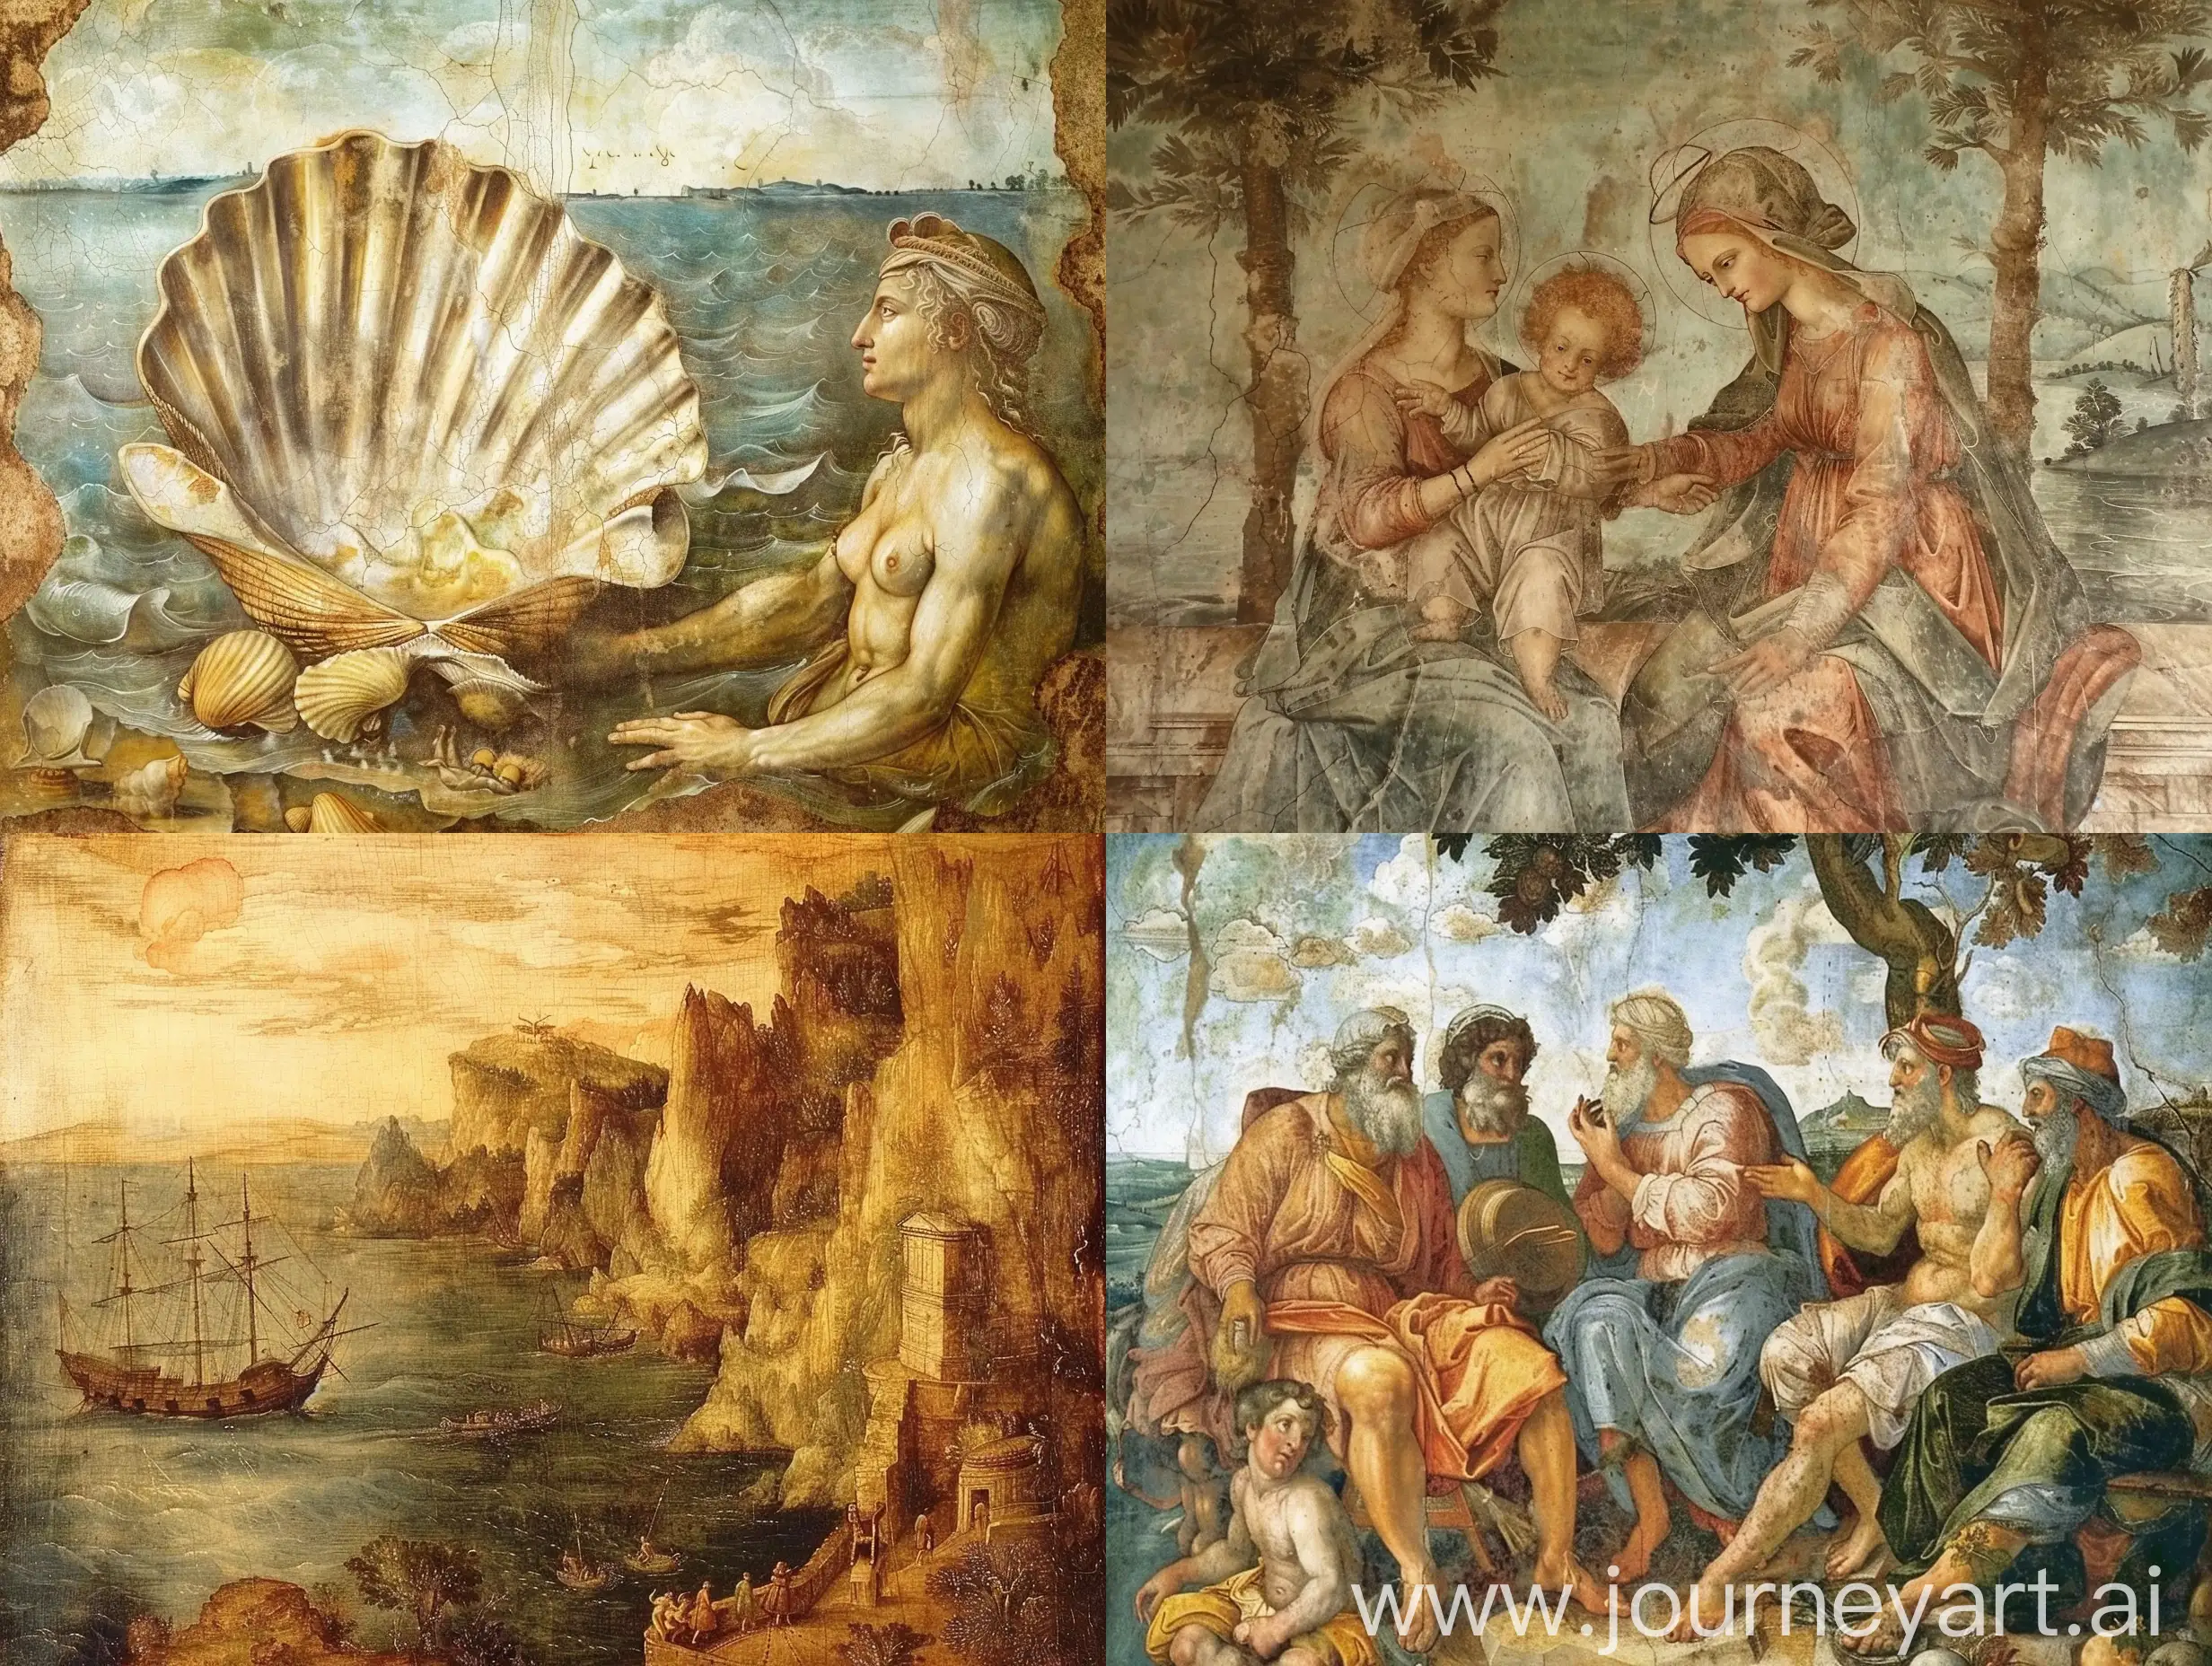 Renaissance-Style-Ionian-Greek-Coastal-Scene-Inspired-by-Leonardo-Da-Vinci